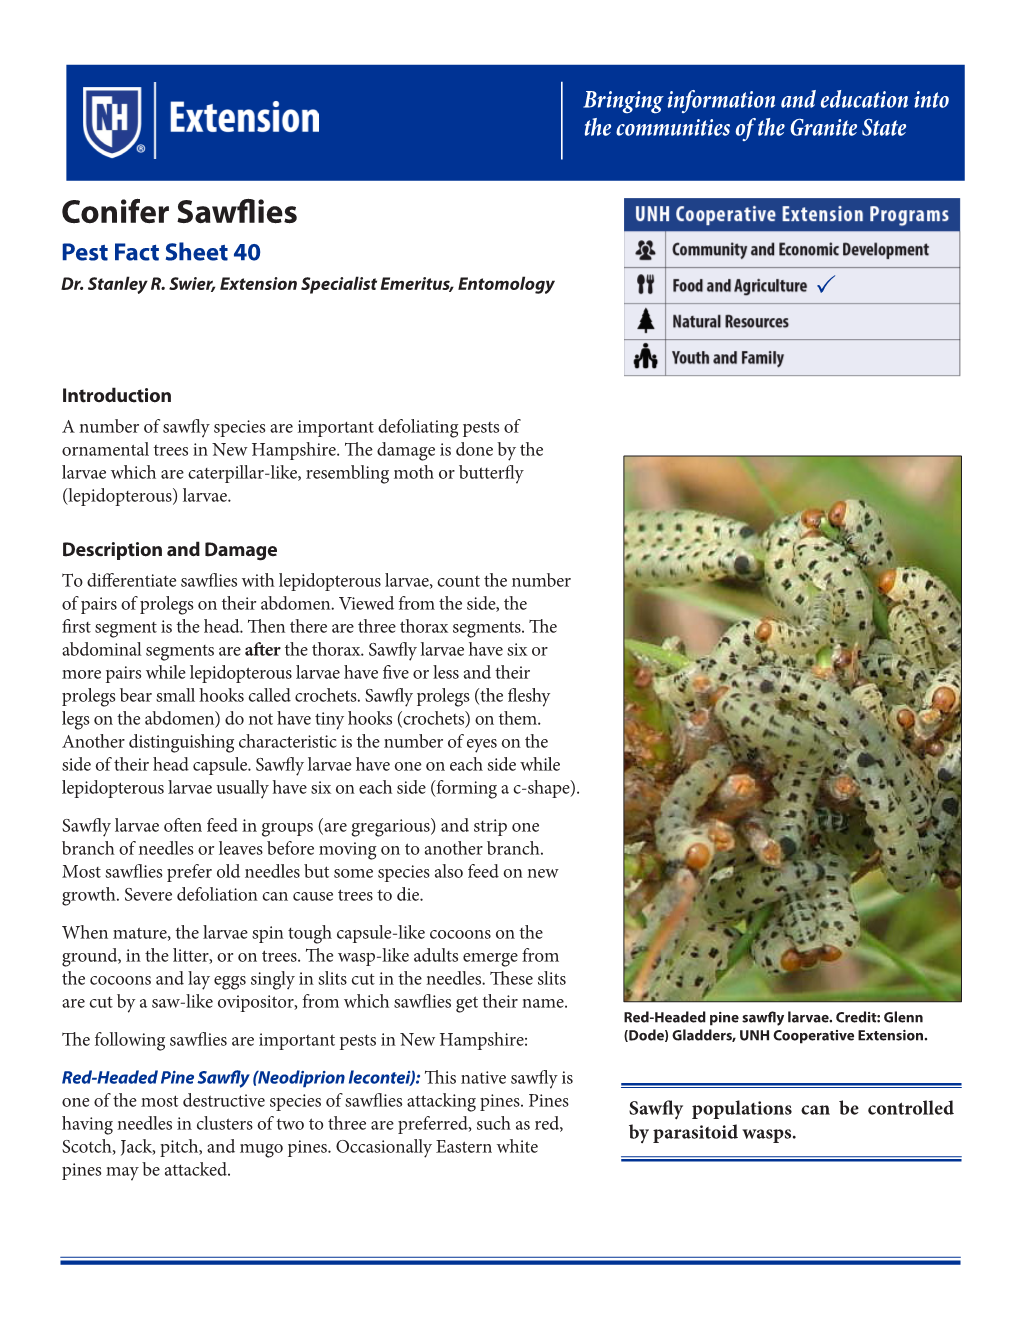 Conifer Sawfly